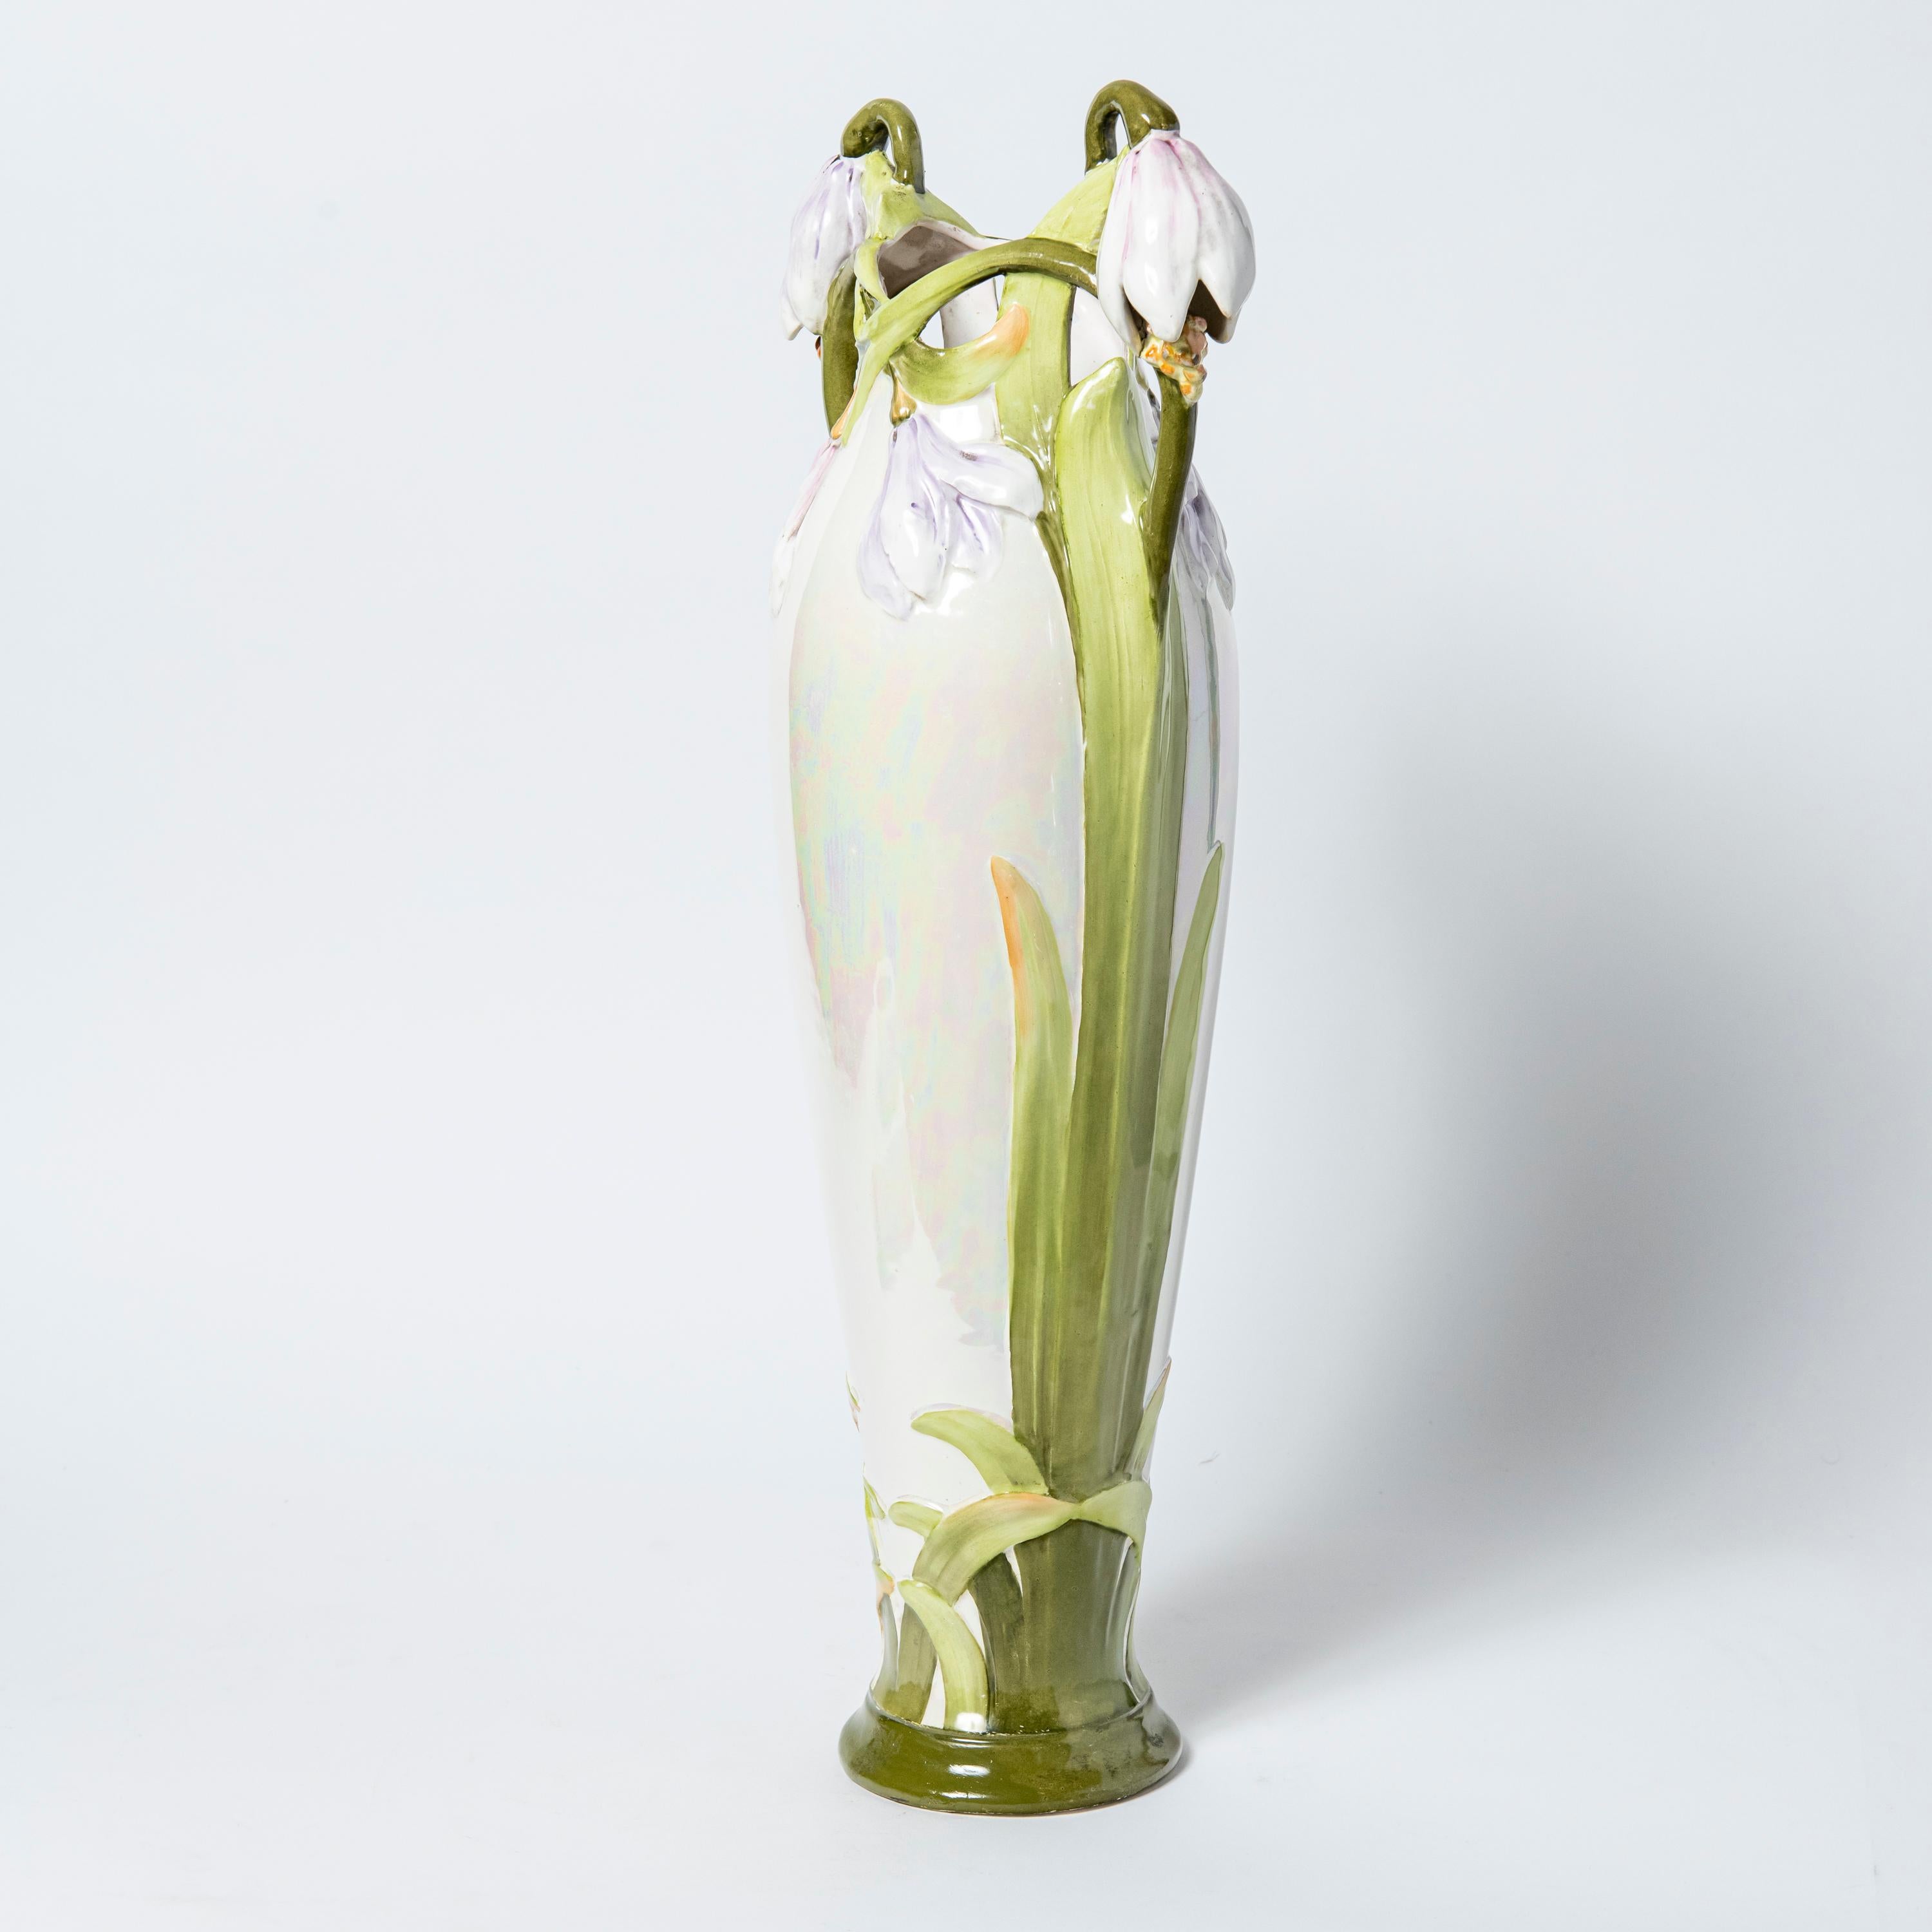  Vase aus glasierter Keramik, Jugendstil, Frankreich, frühes 20. Jahrhundert.